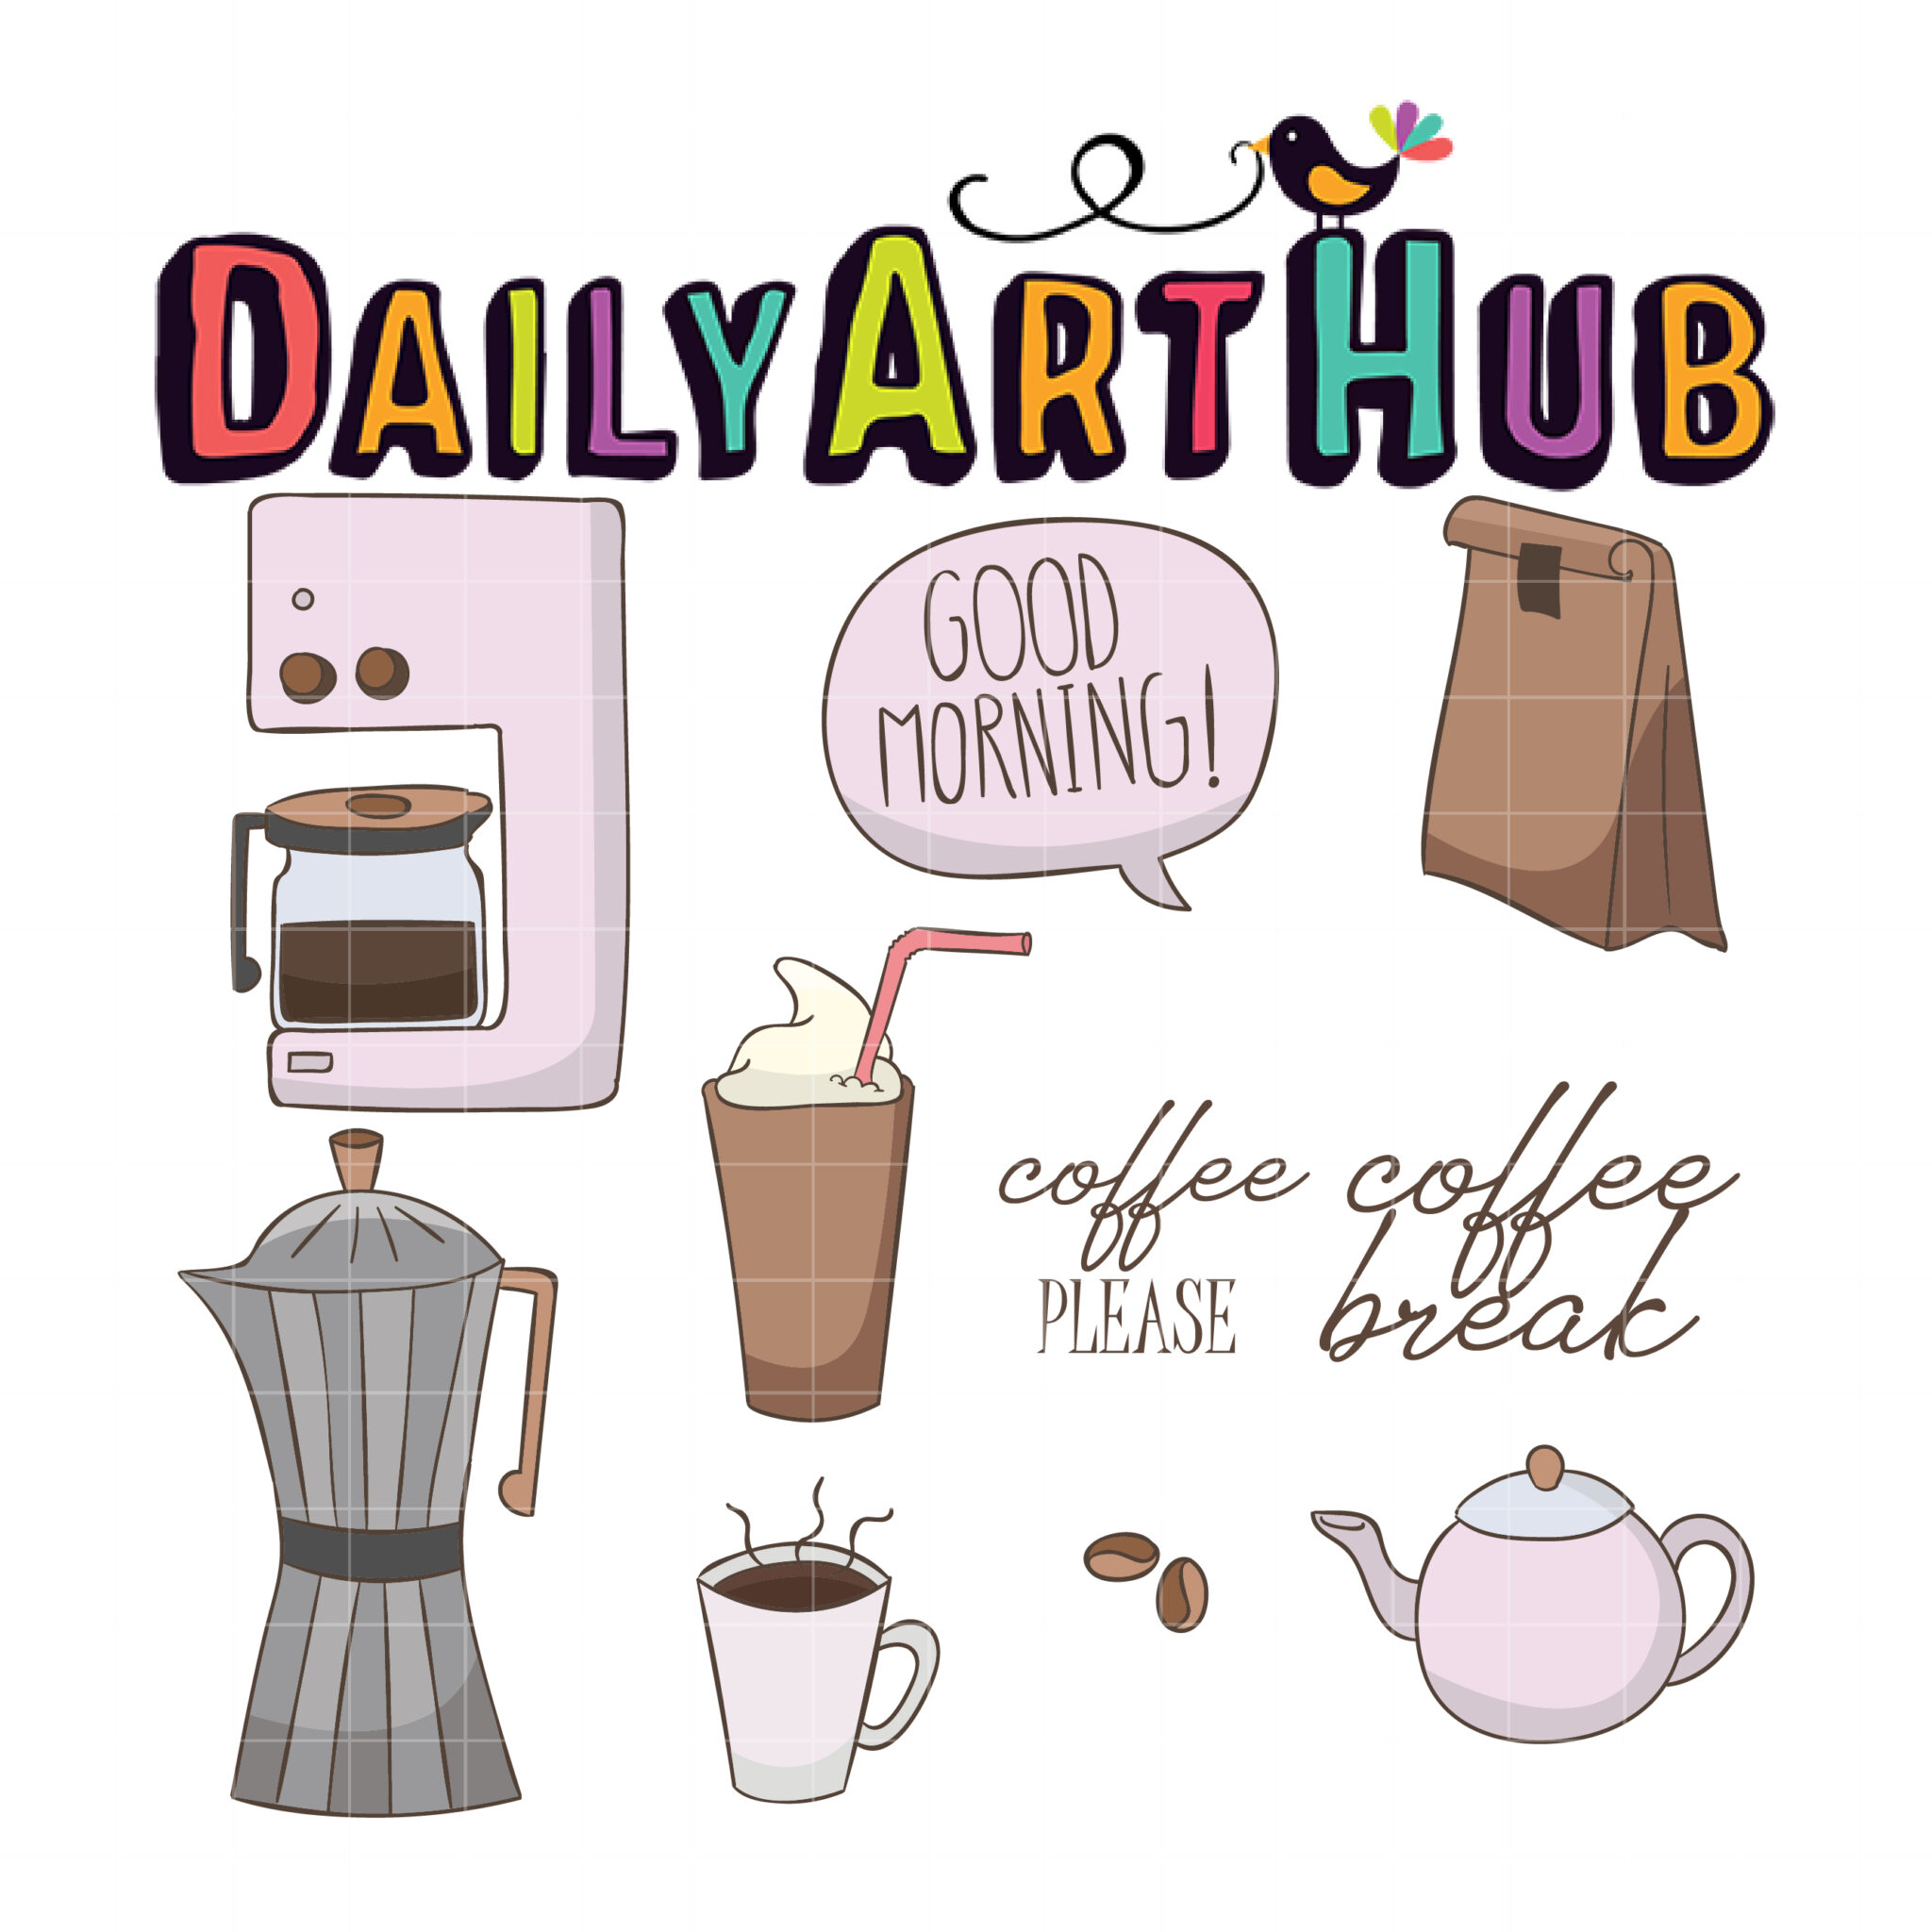 Cute Coffee Cup Expressions Clip Art Set – Daily Art Hub